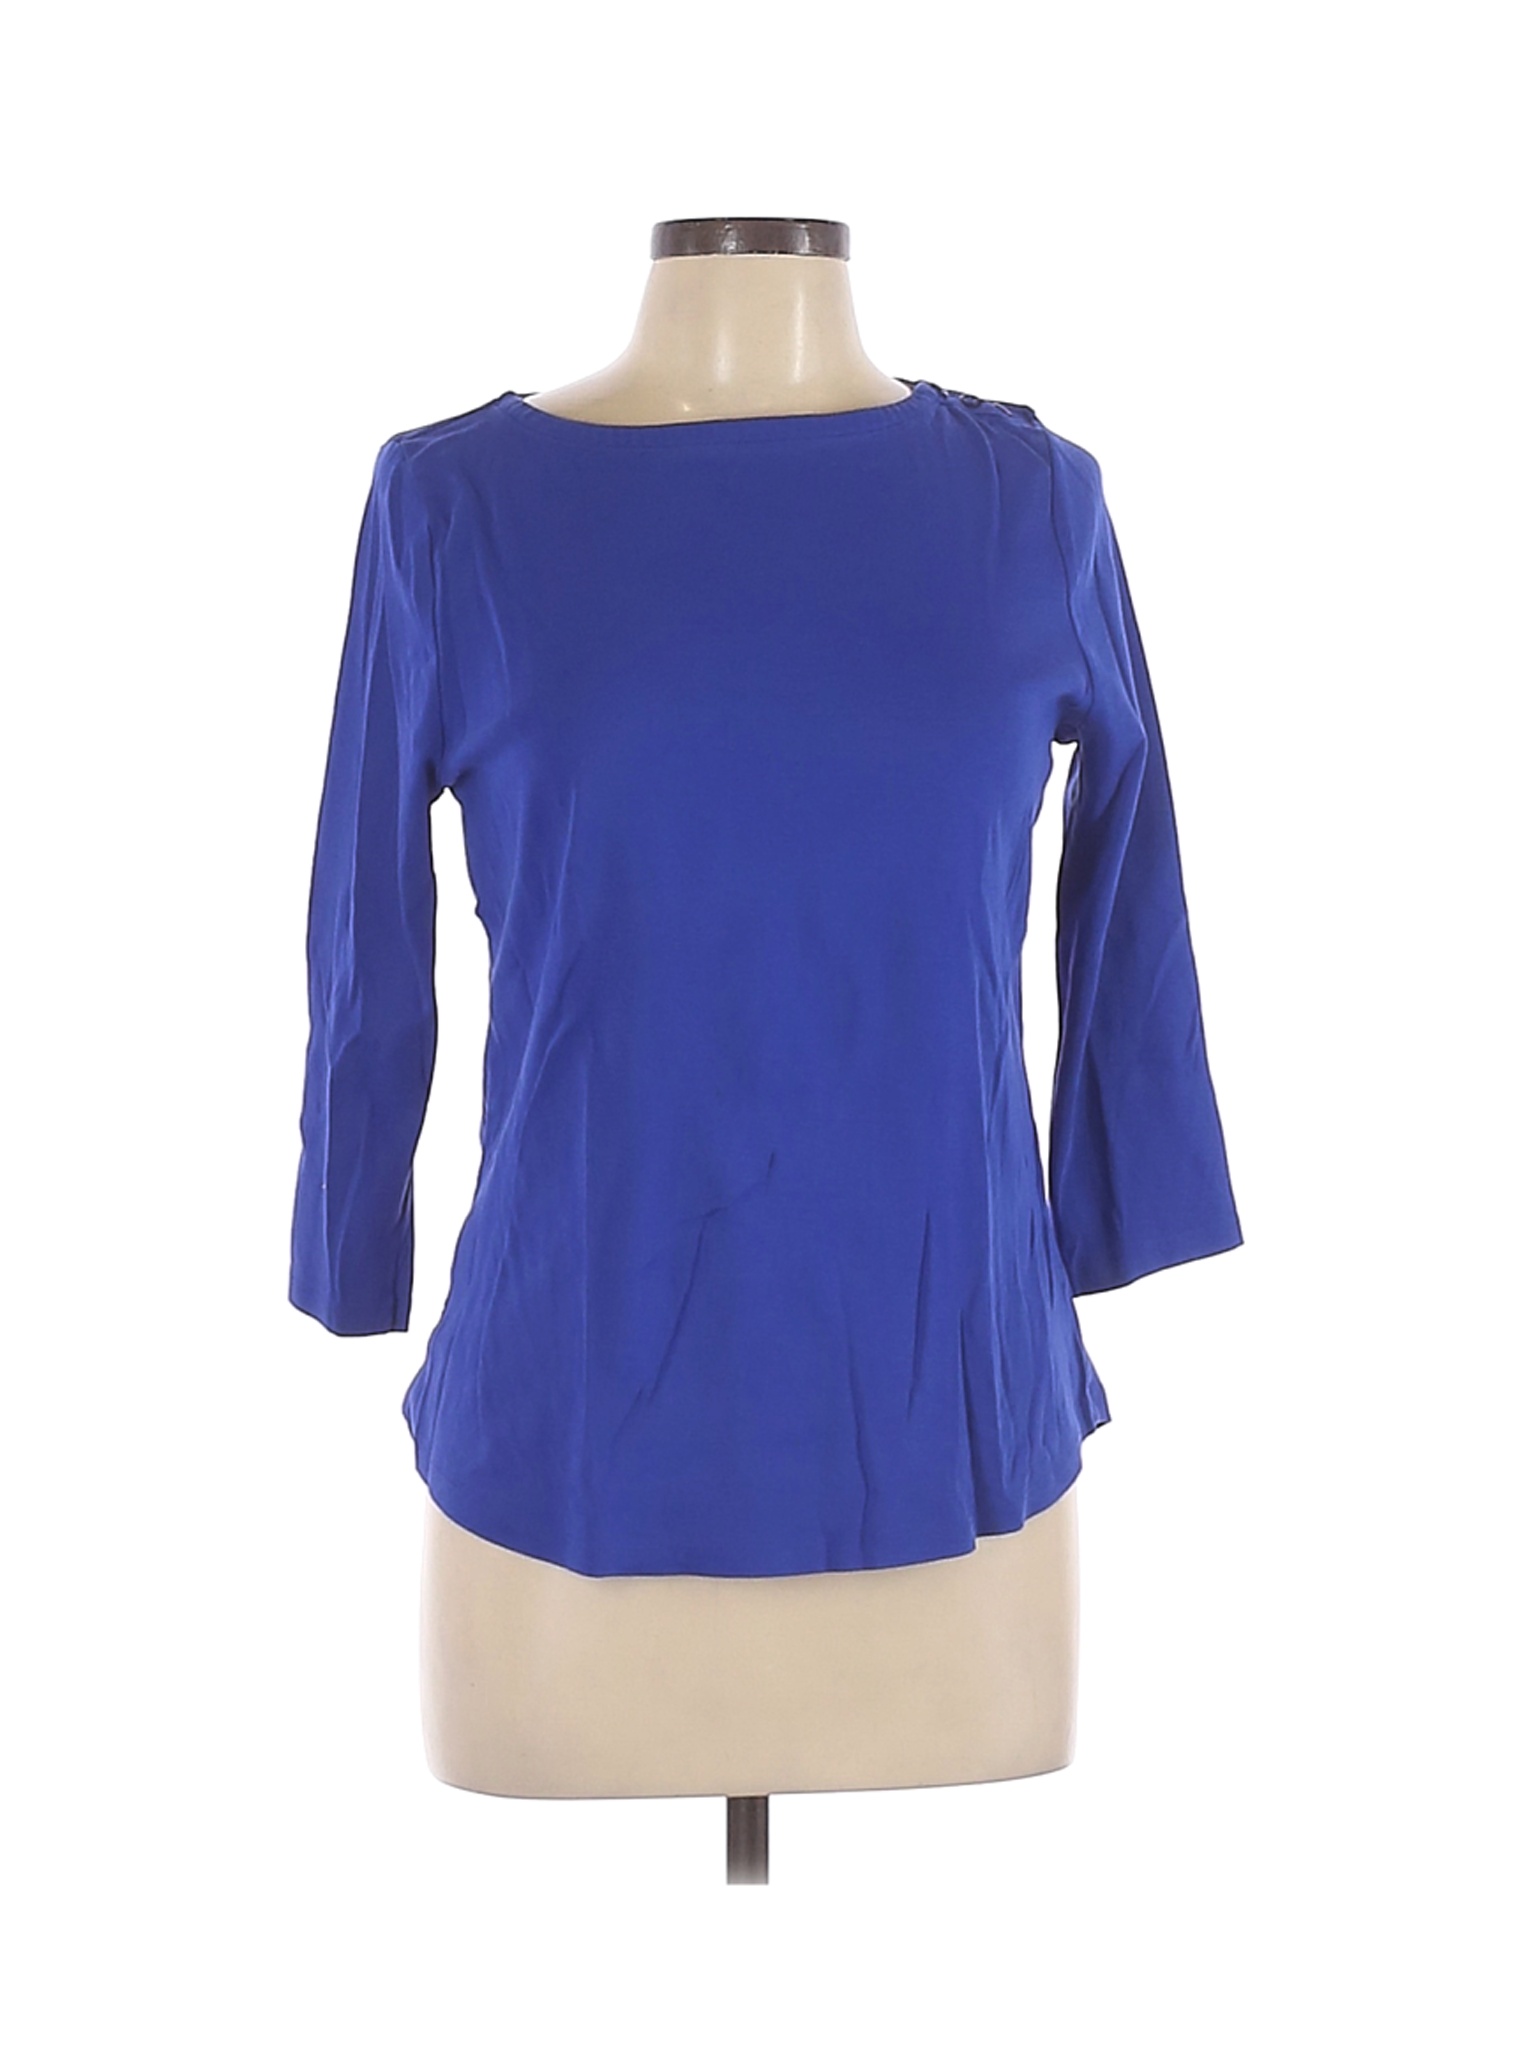 Charter Club Women Blue Long Sleeve T-Shirt L | eBay